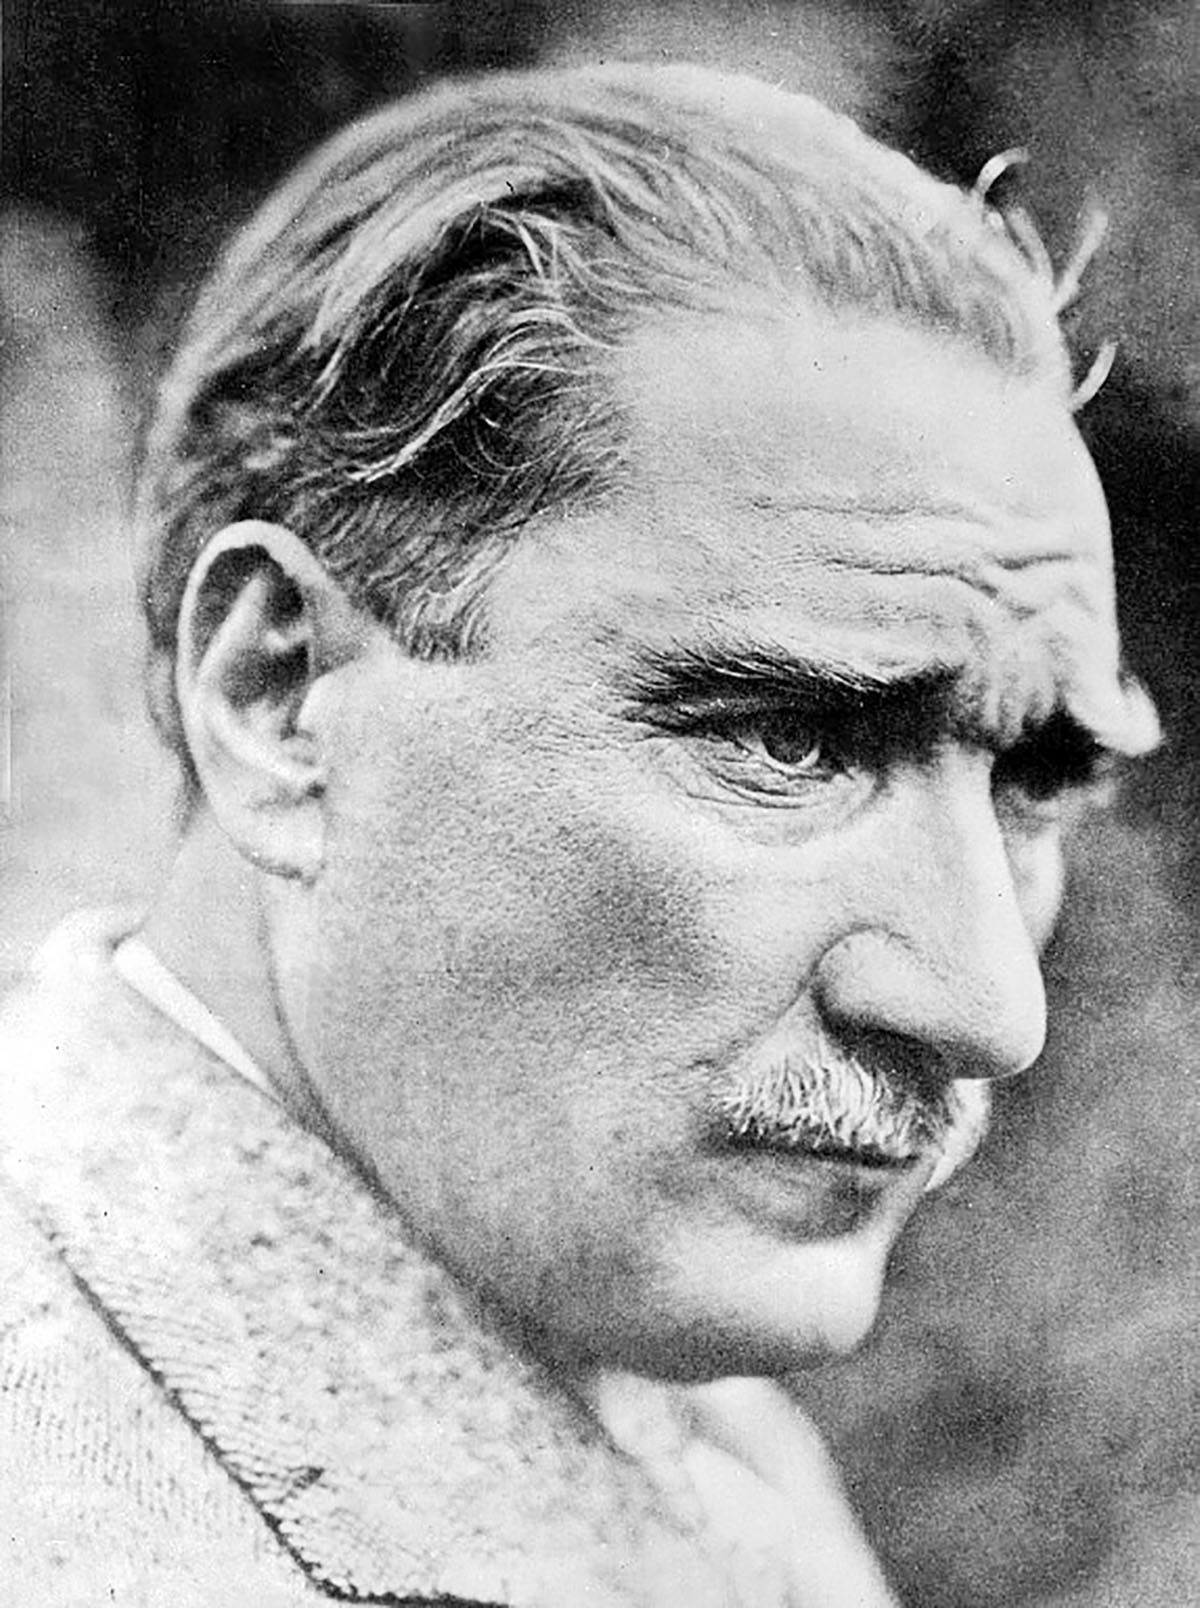 Mustafa Kemal Ataturk, the father of modern Turkey in 1923.